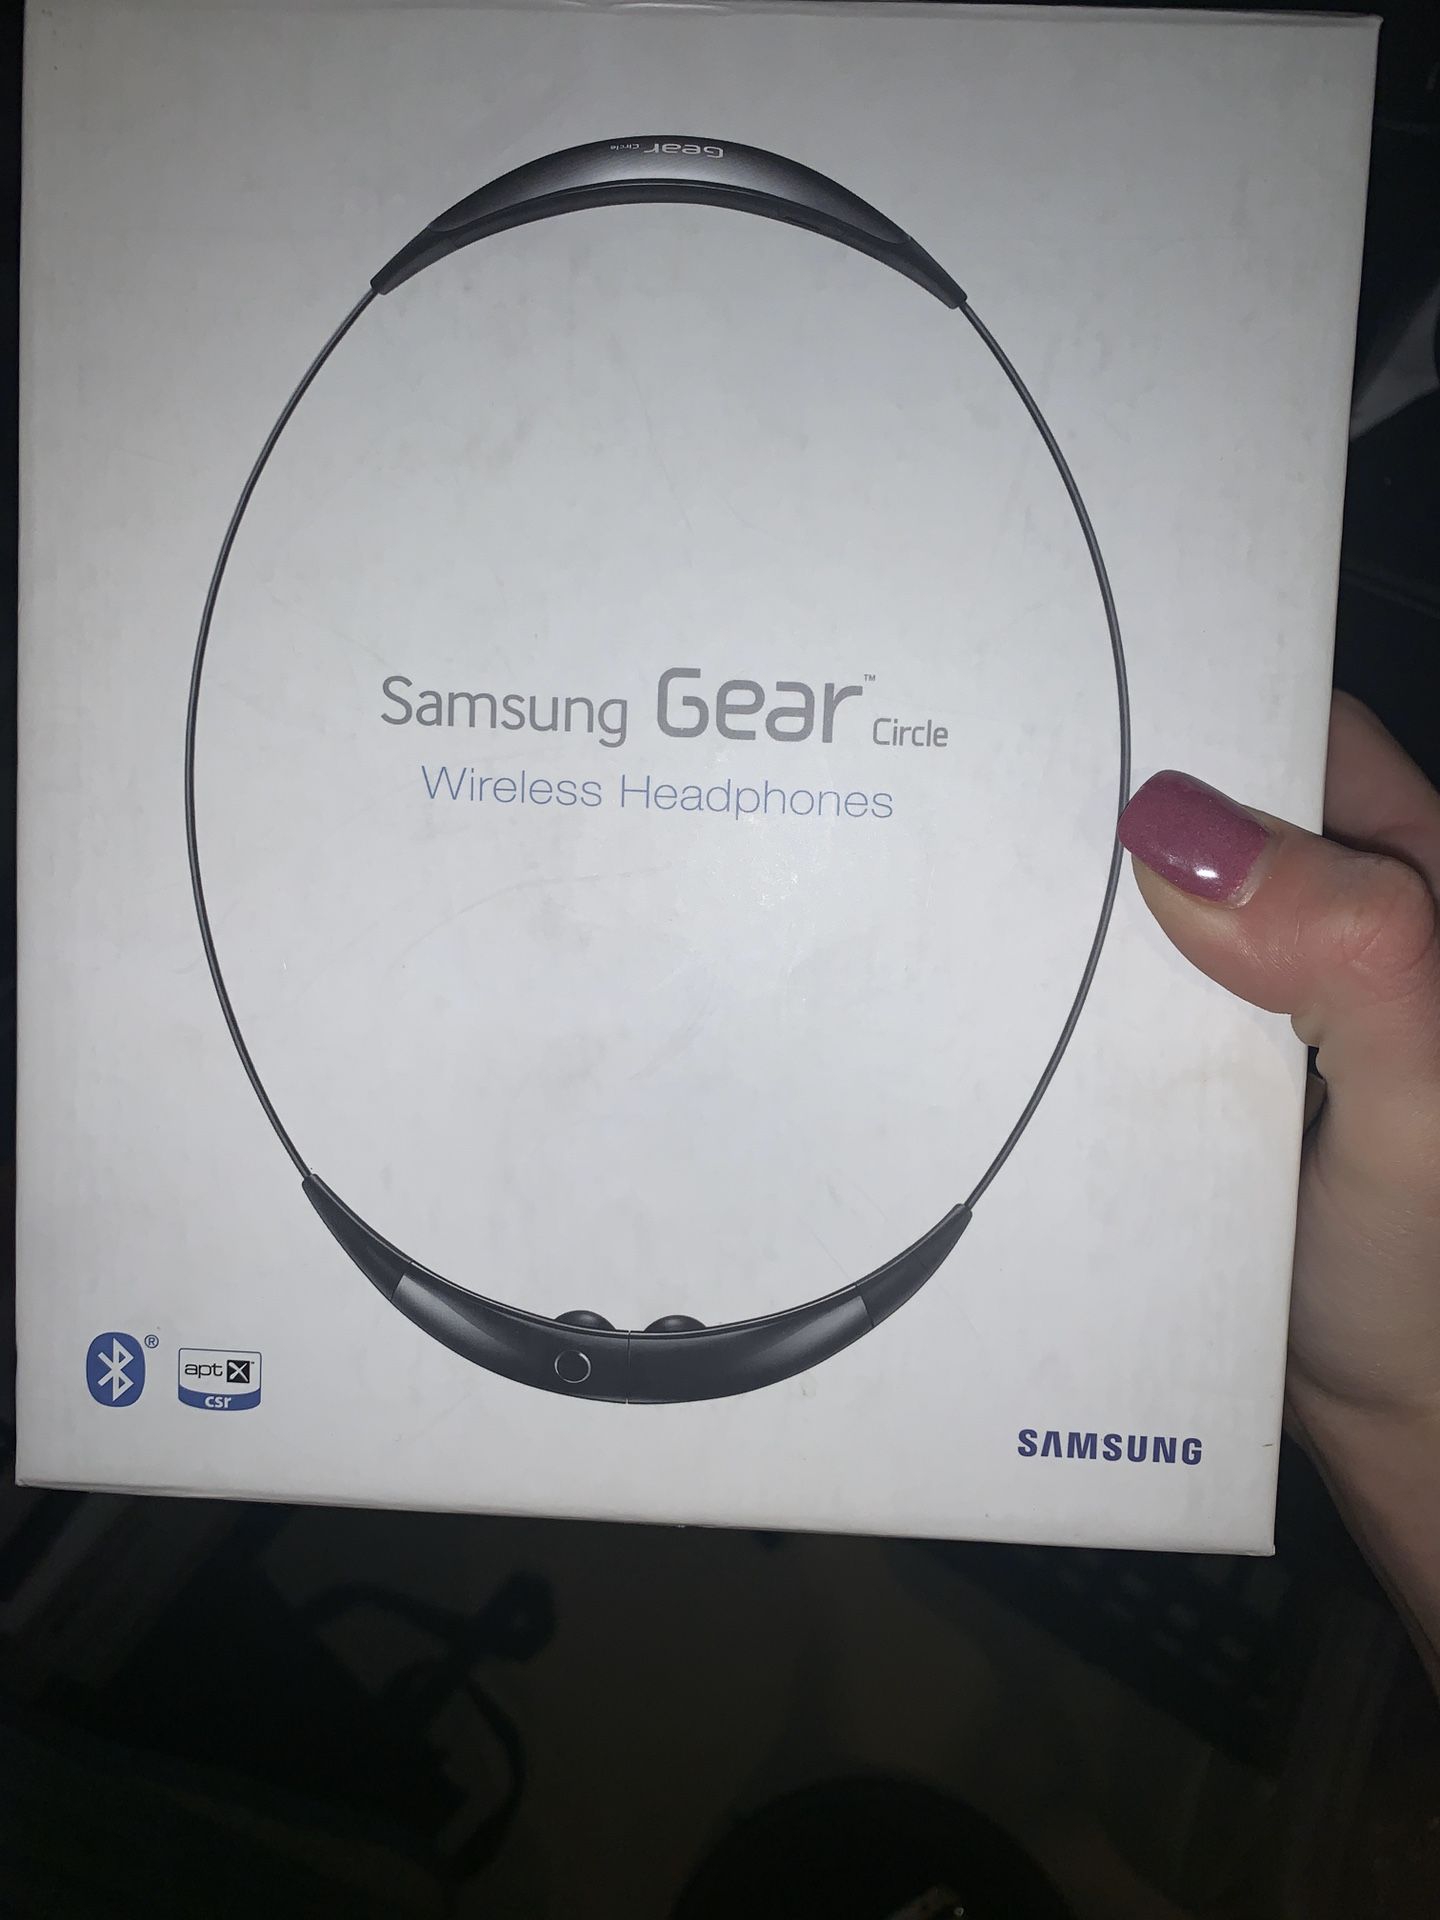 Samsung gear circle wireless headphones for Samsung phones